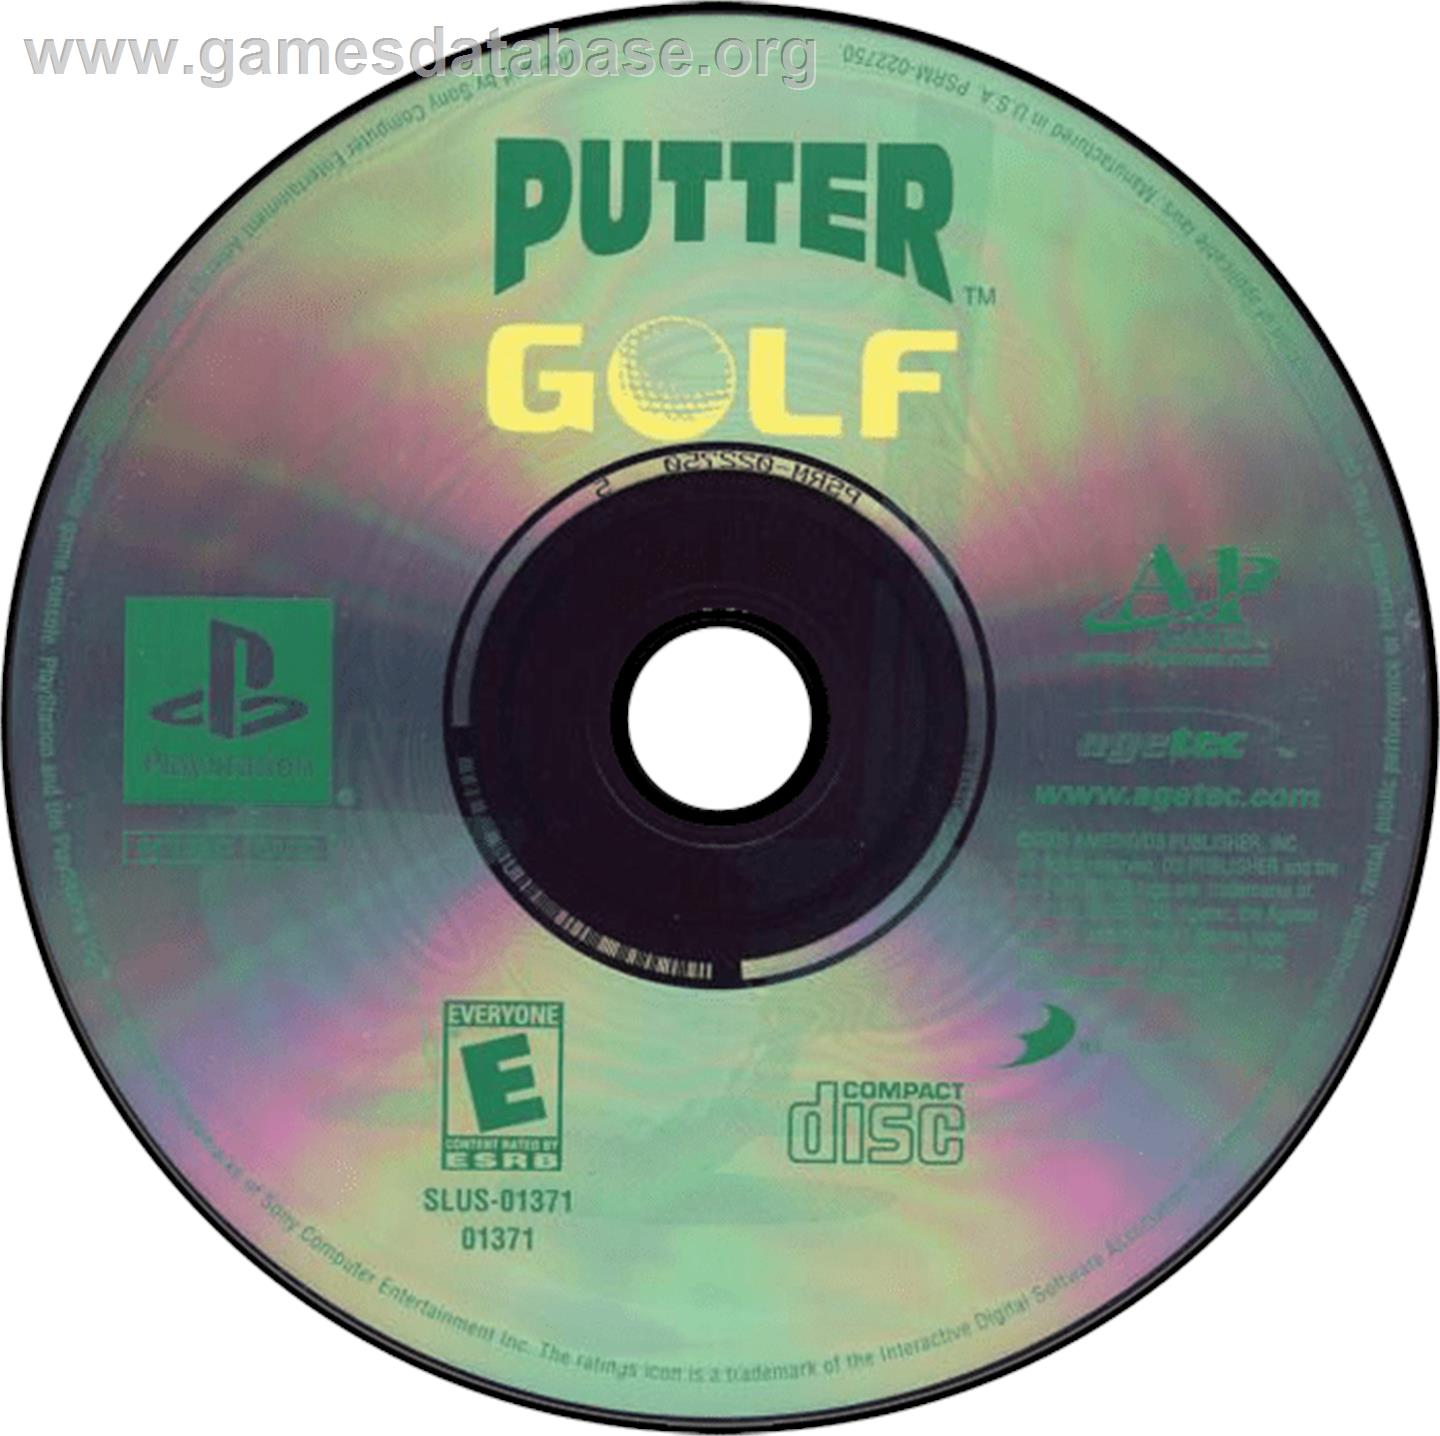 Putter Golf - Sony Playstation - Artwork - Disc